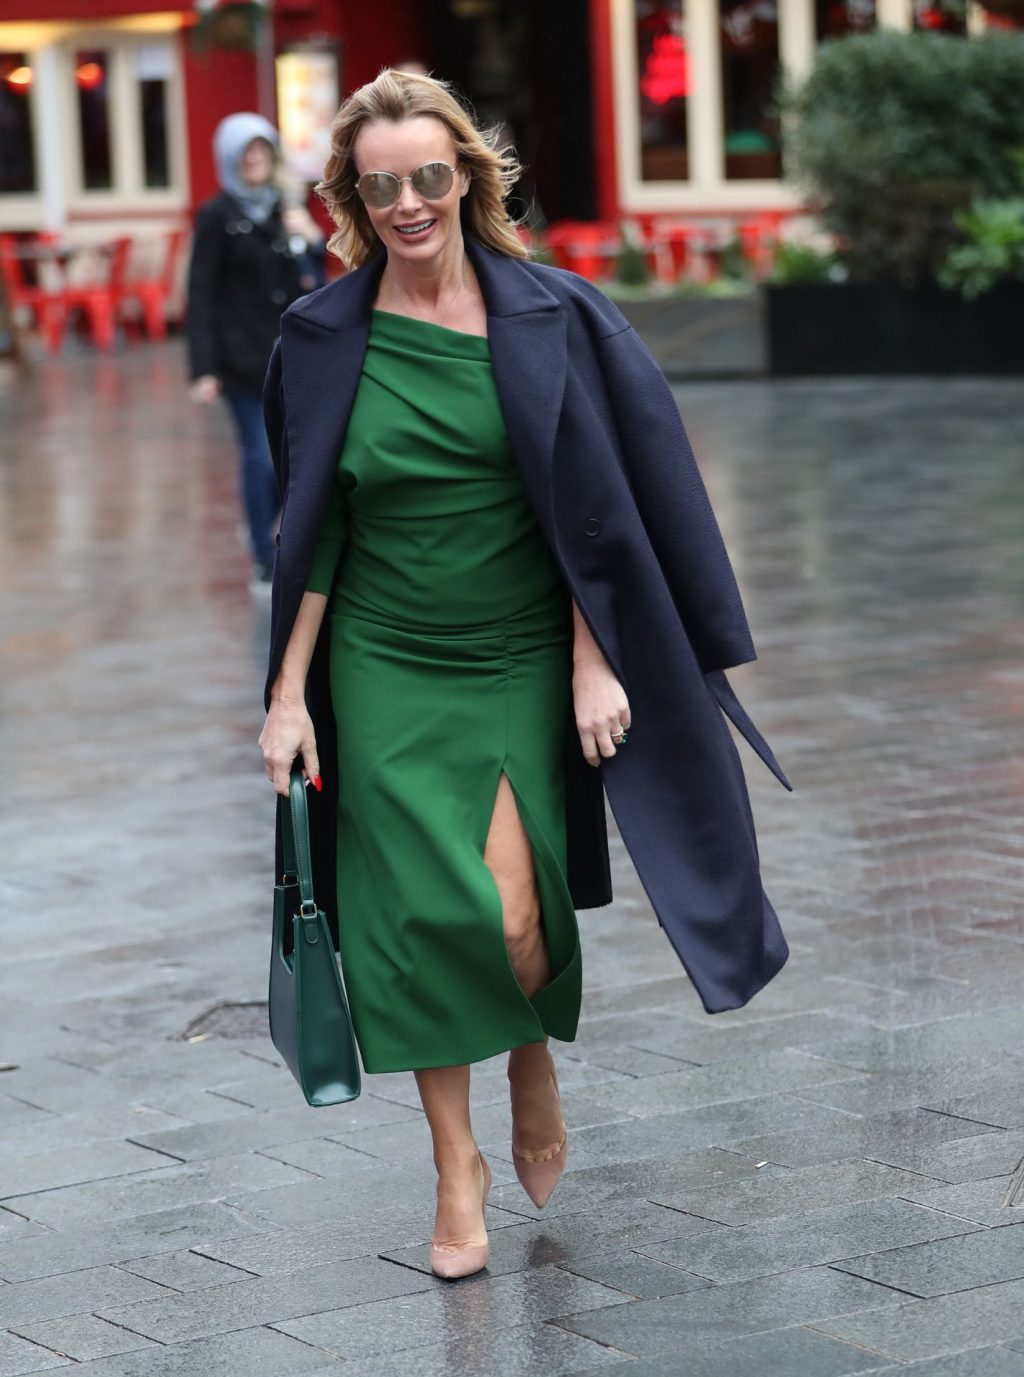 Amanda Holden Shows Her Pokies in a Green Split Dress (8 Photos)